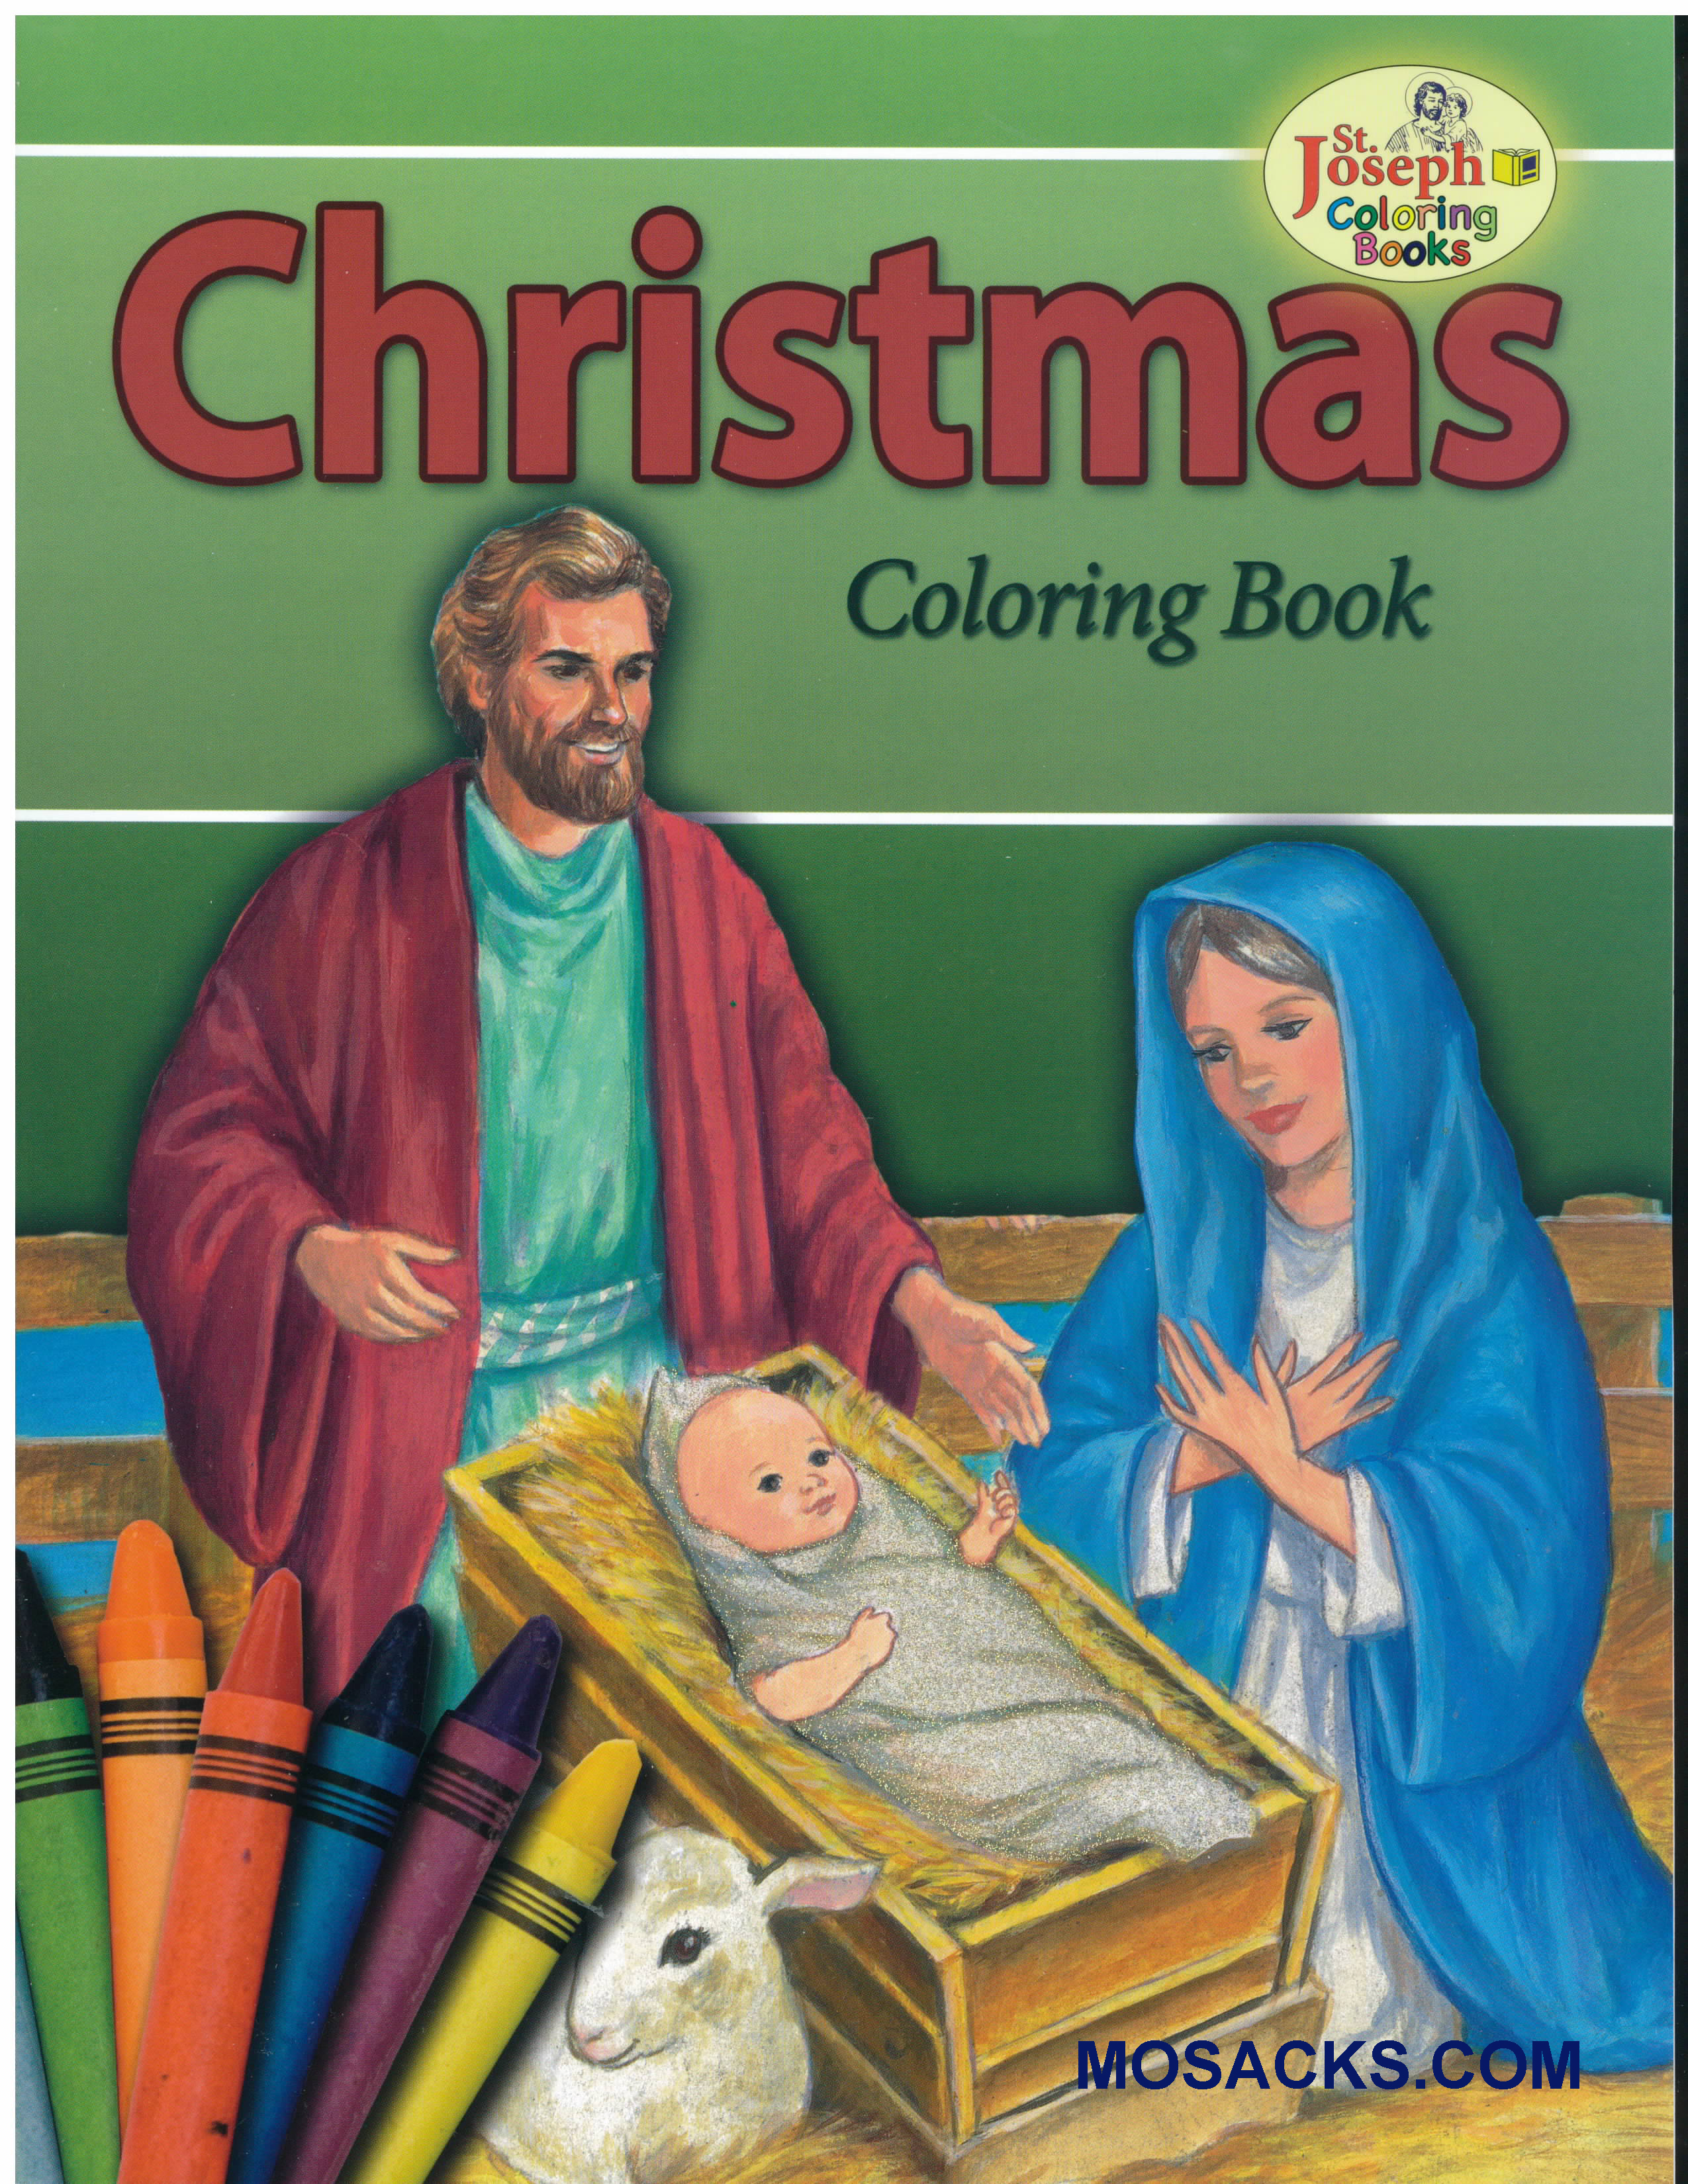 St Joseph Educational Coloring Book Christmas-978089942-680-8